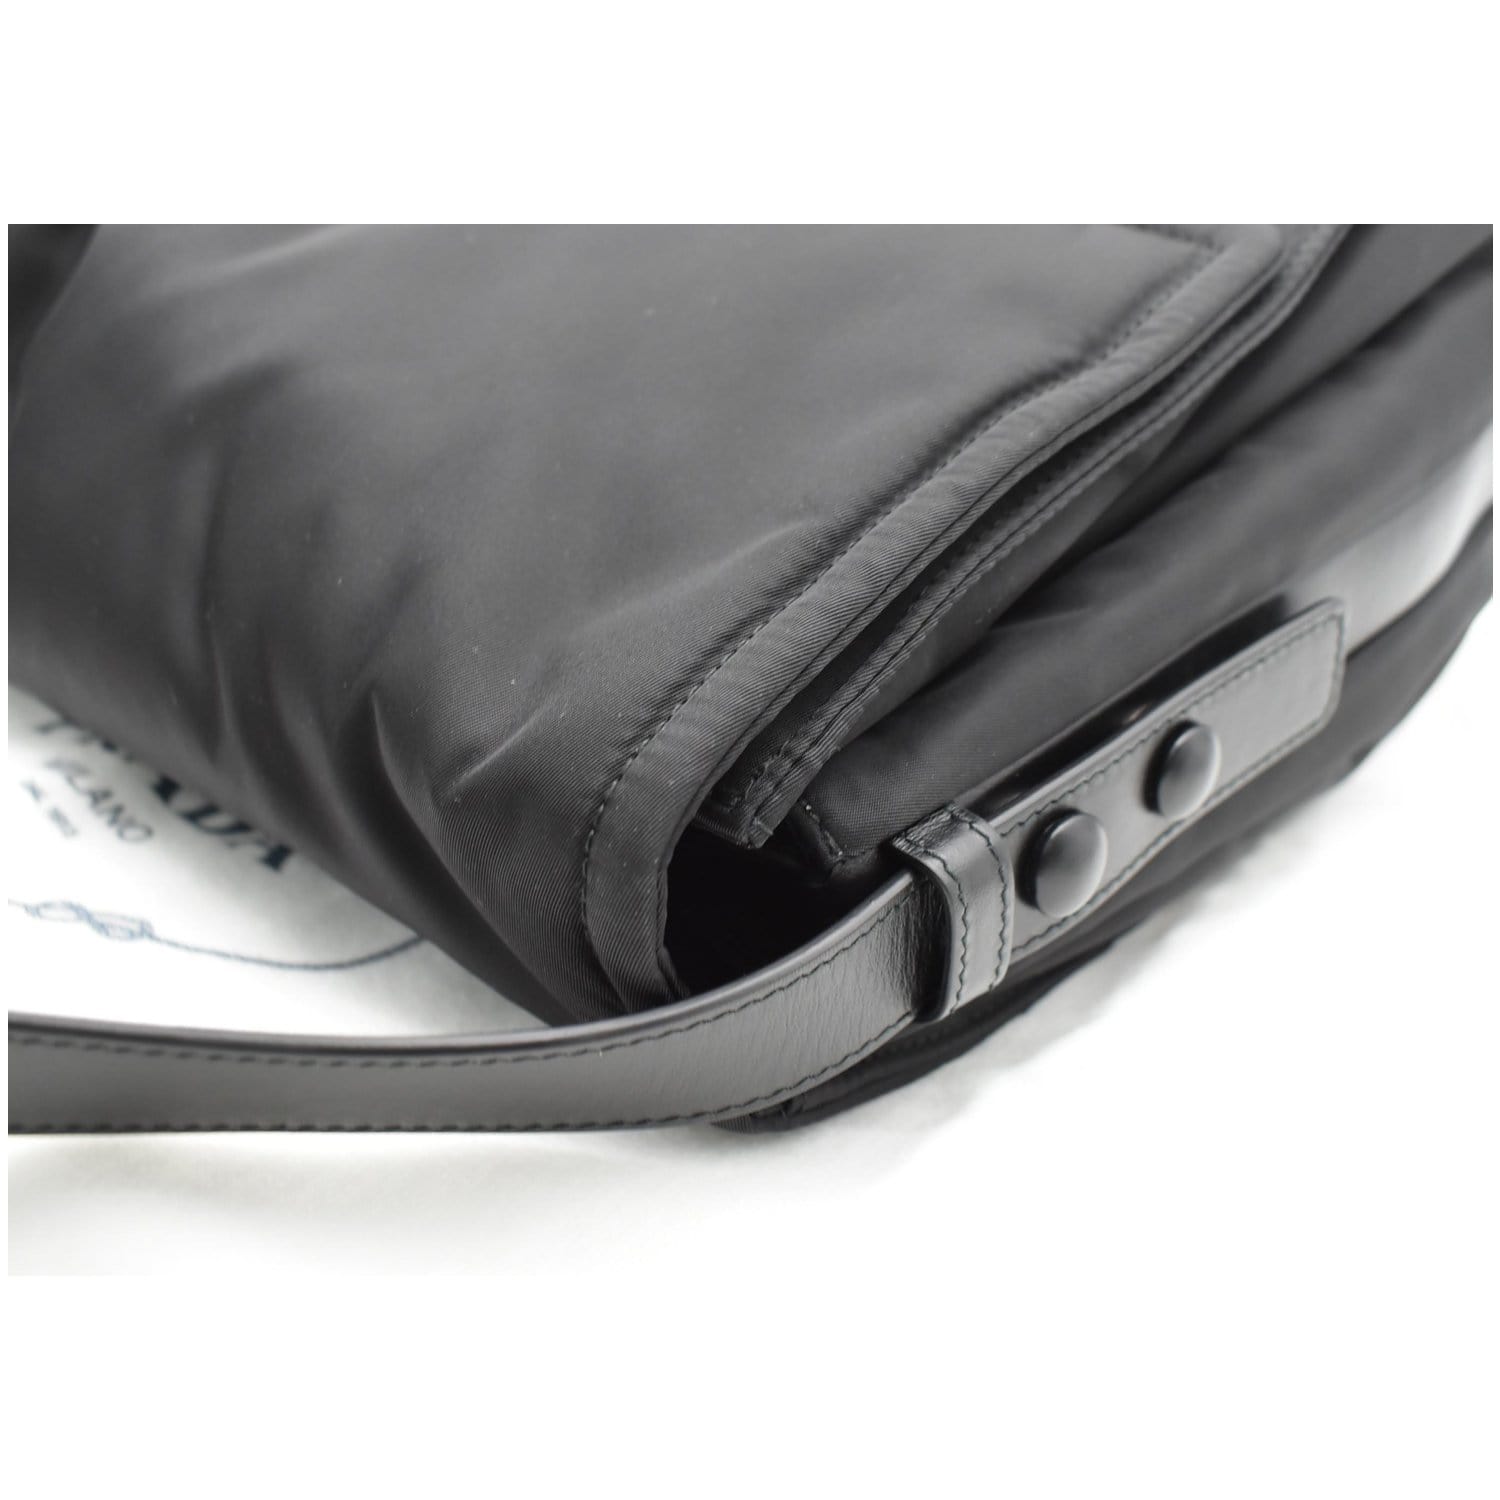 Buy Prada Black Padded Nylon Shoulder Bag